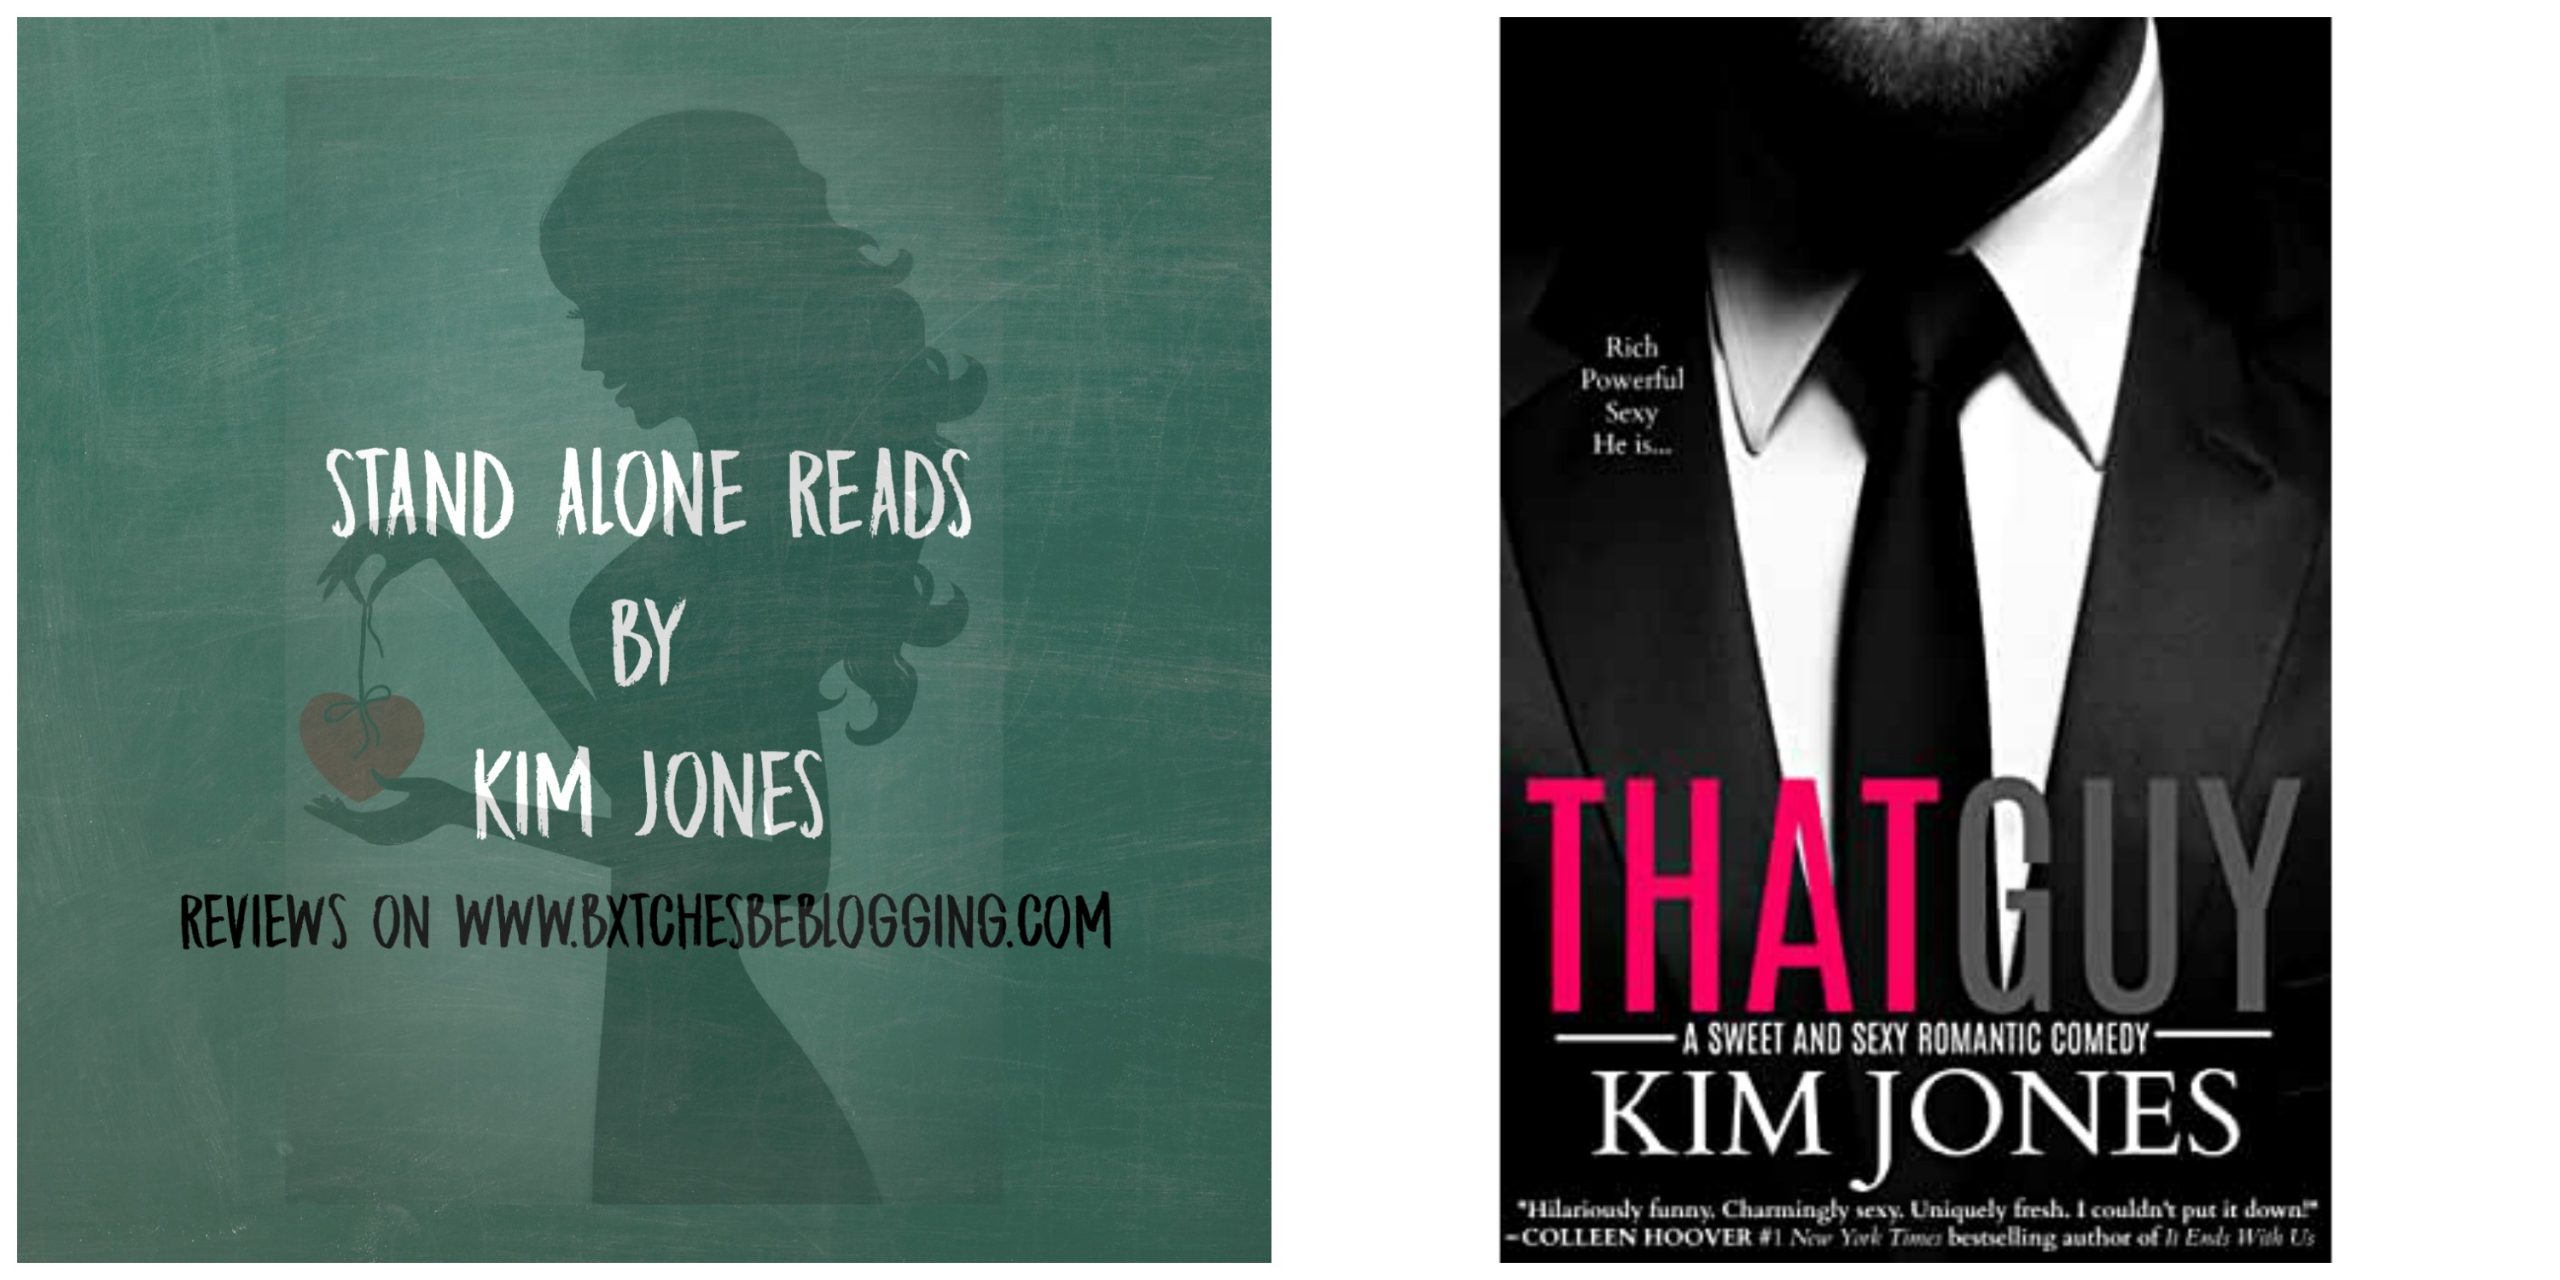 Kim Jones Author | Book Reviews on www.bxtchesbeblogging.com